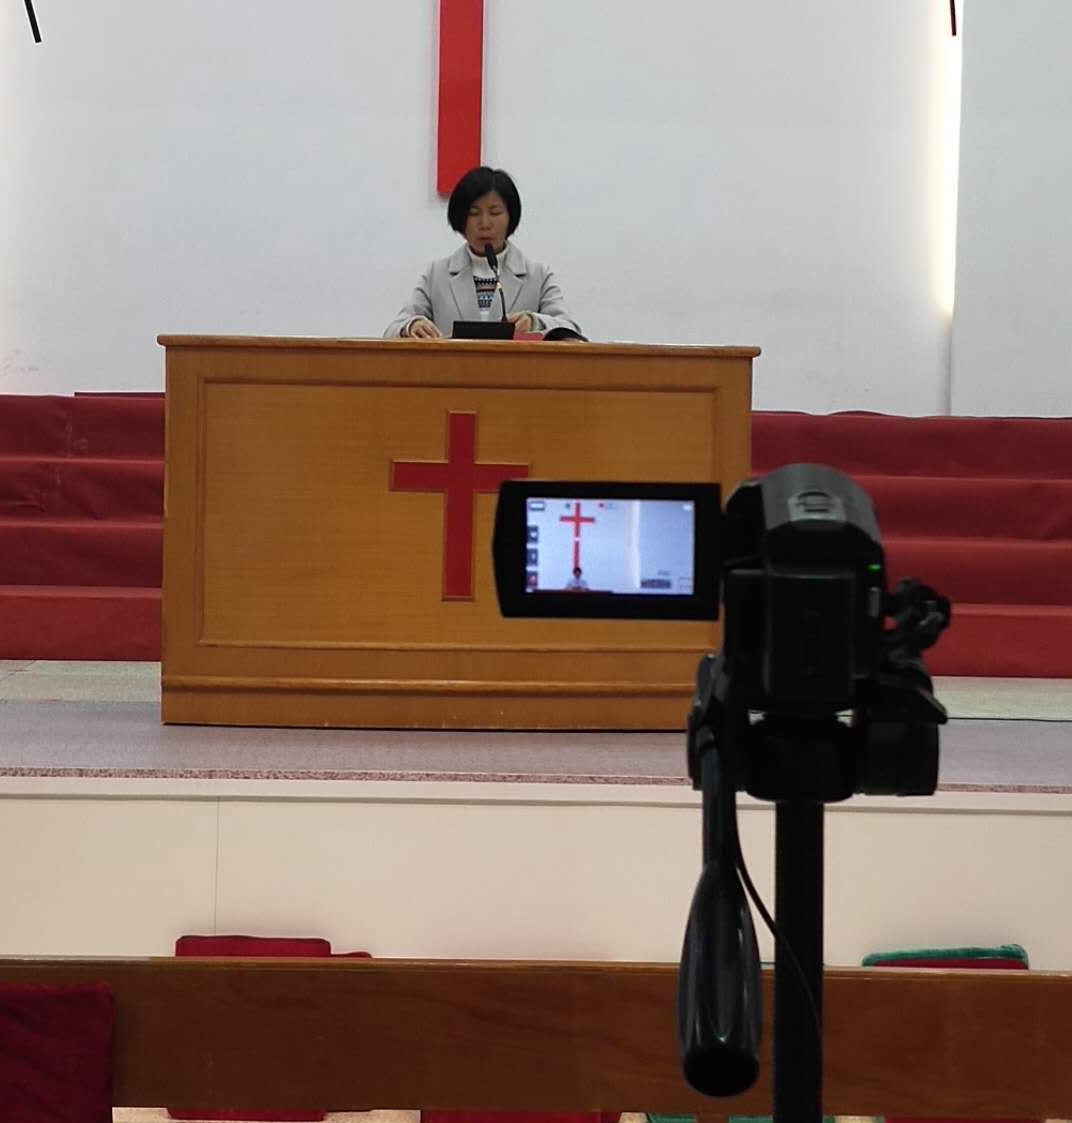 The Sunday service of Puyi Church in Zhangzhou, Fujian was being recorded in March 2020. 